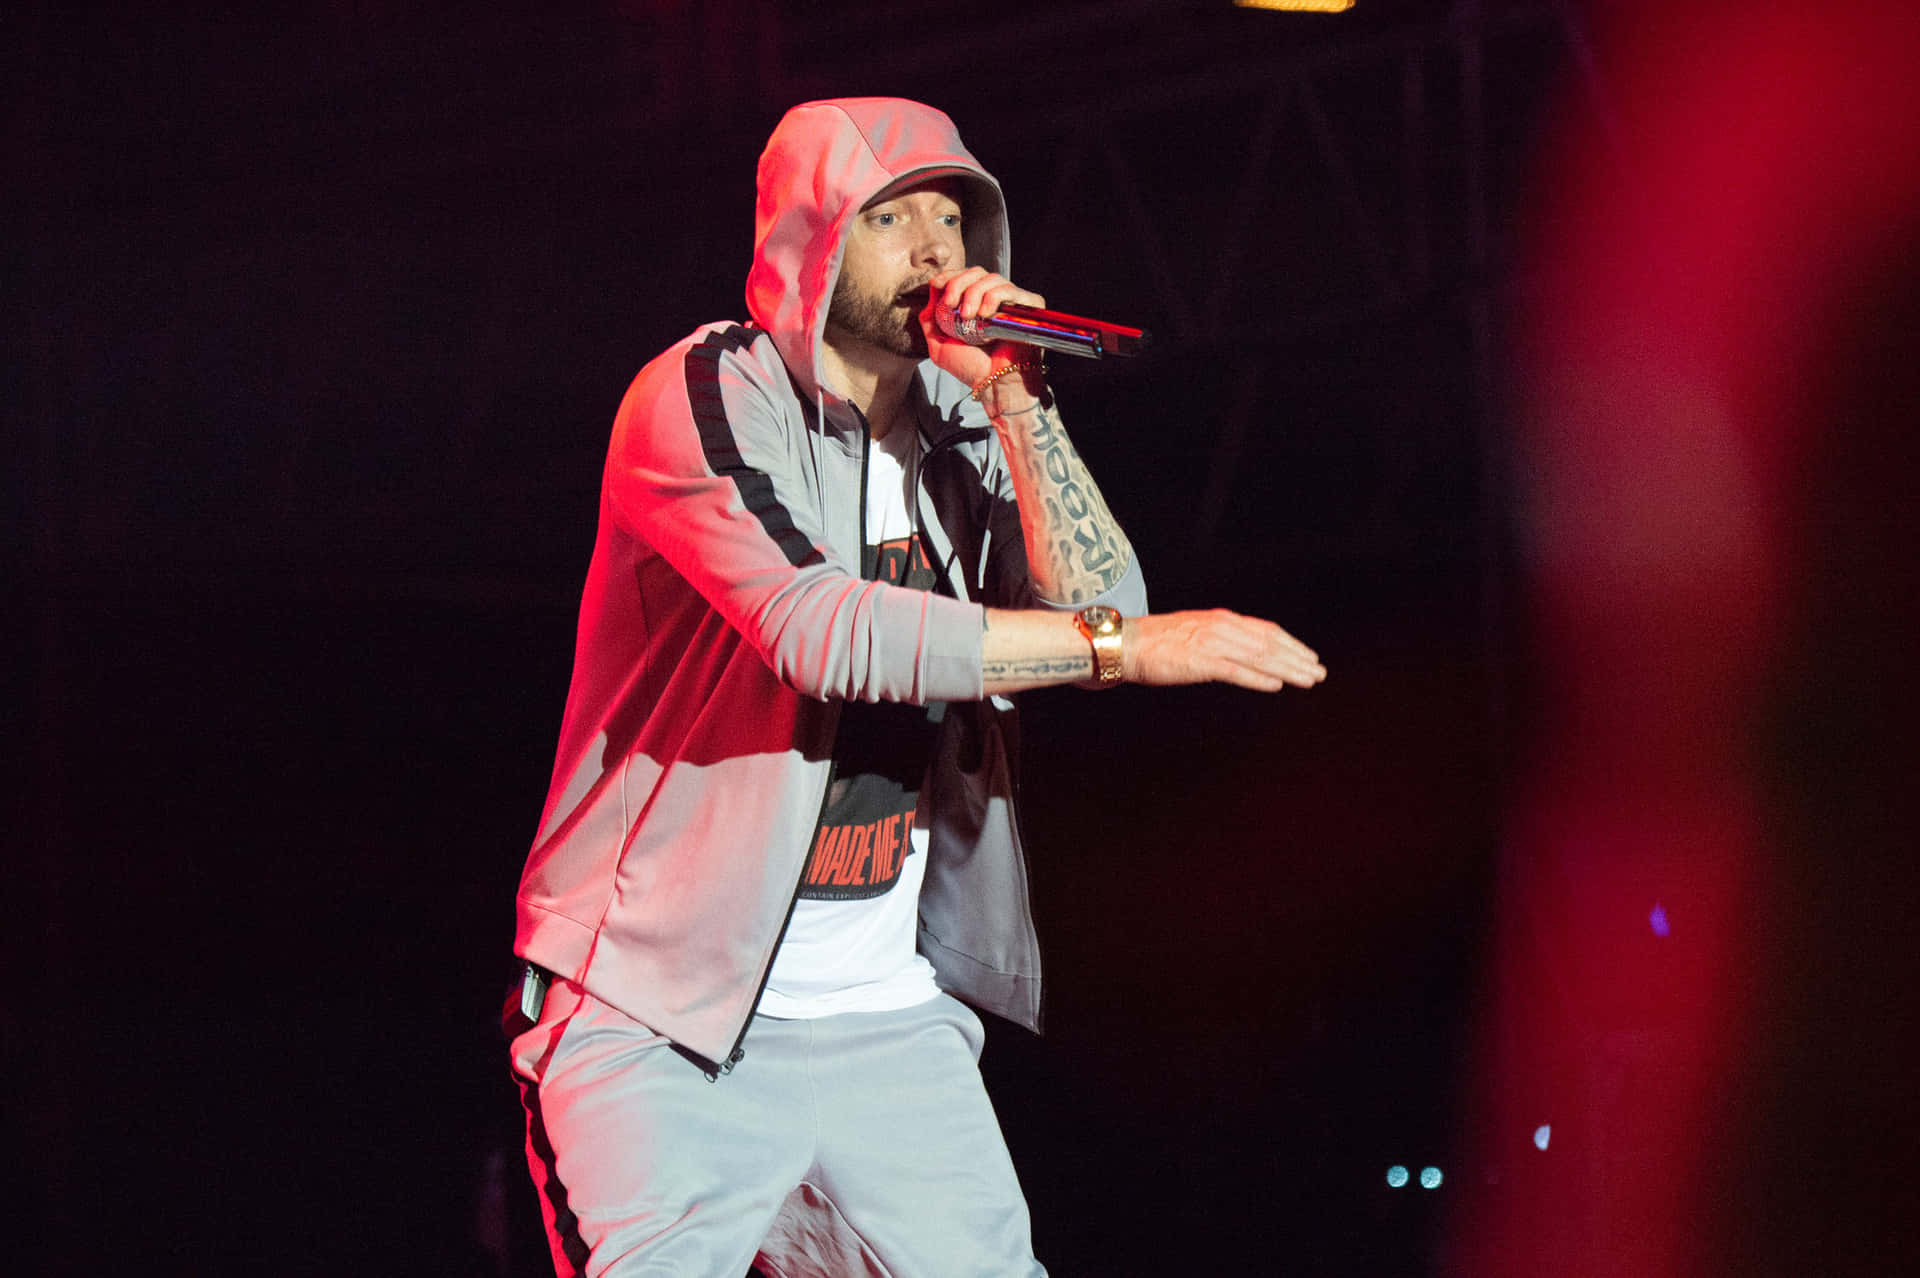 "Eminem - A Legend Amongst Hip-Hop Artists”